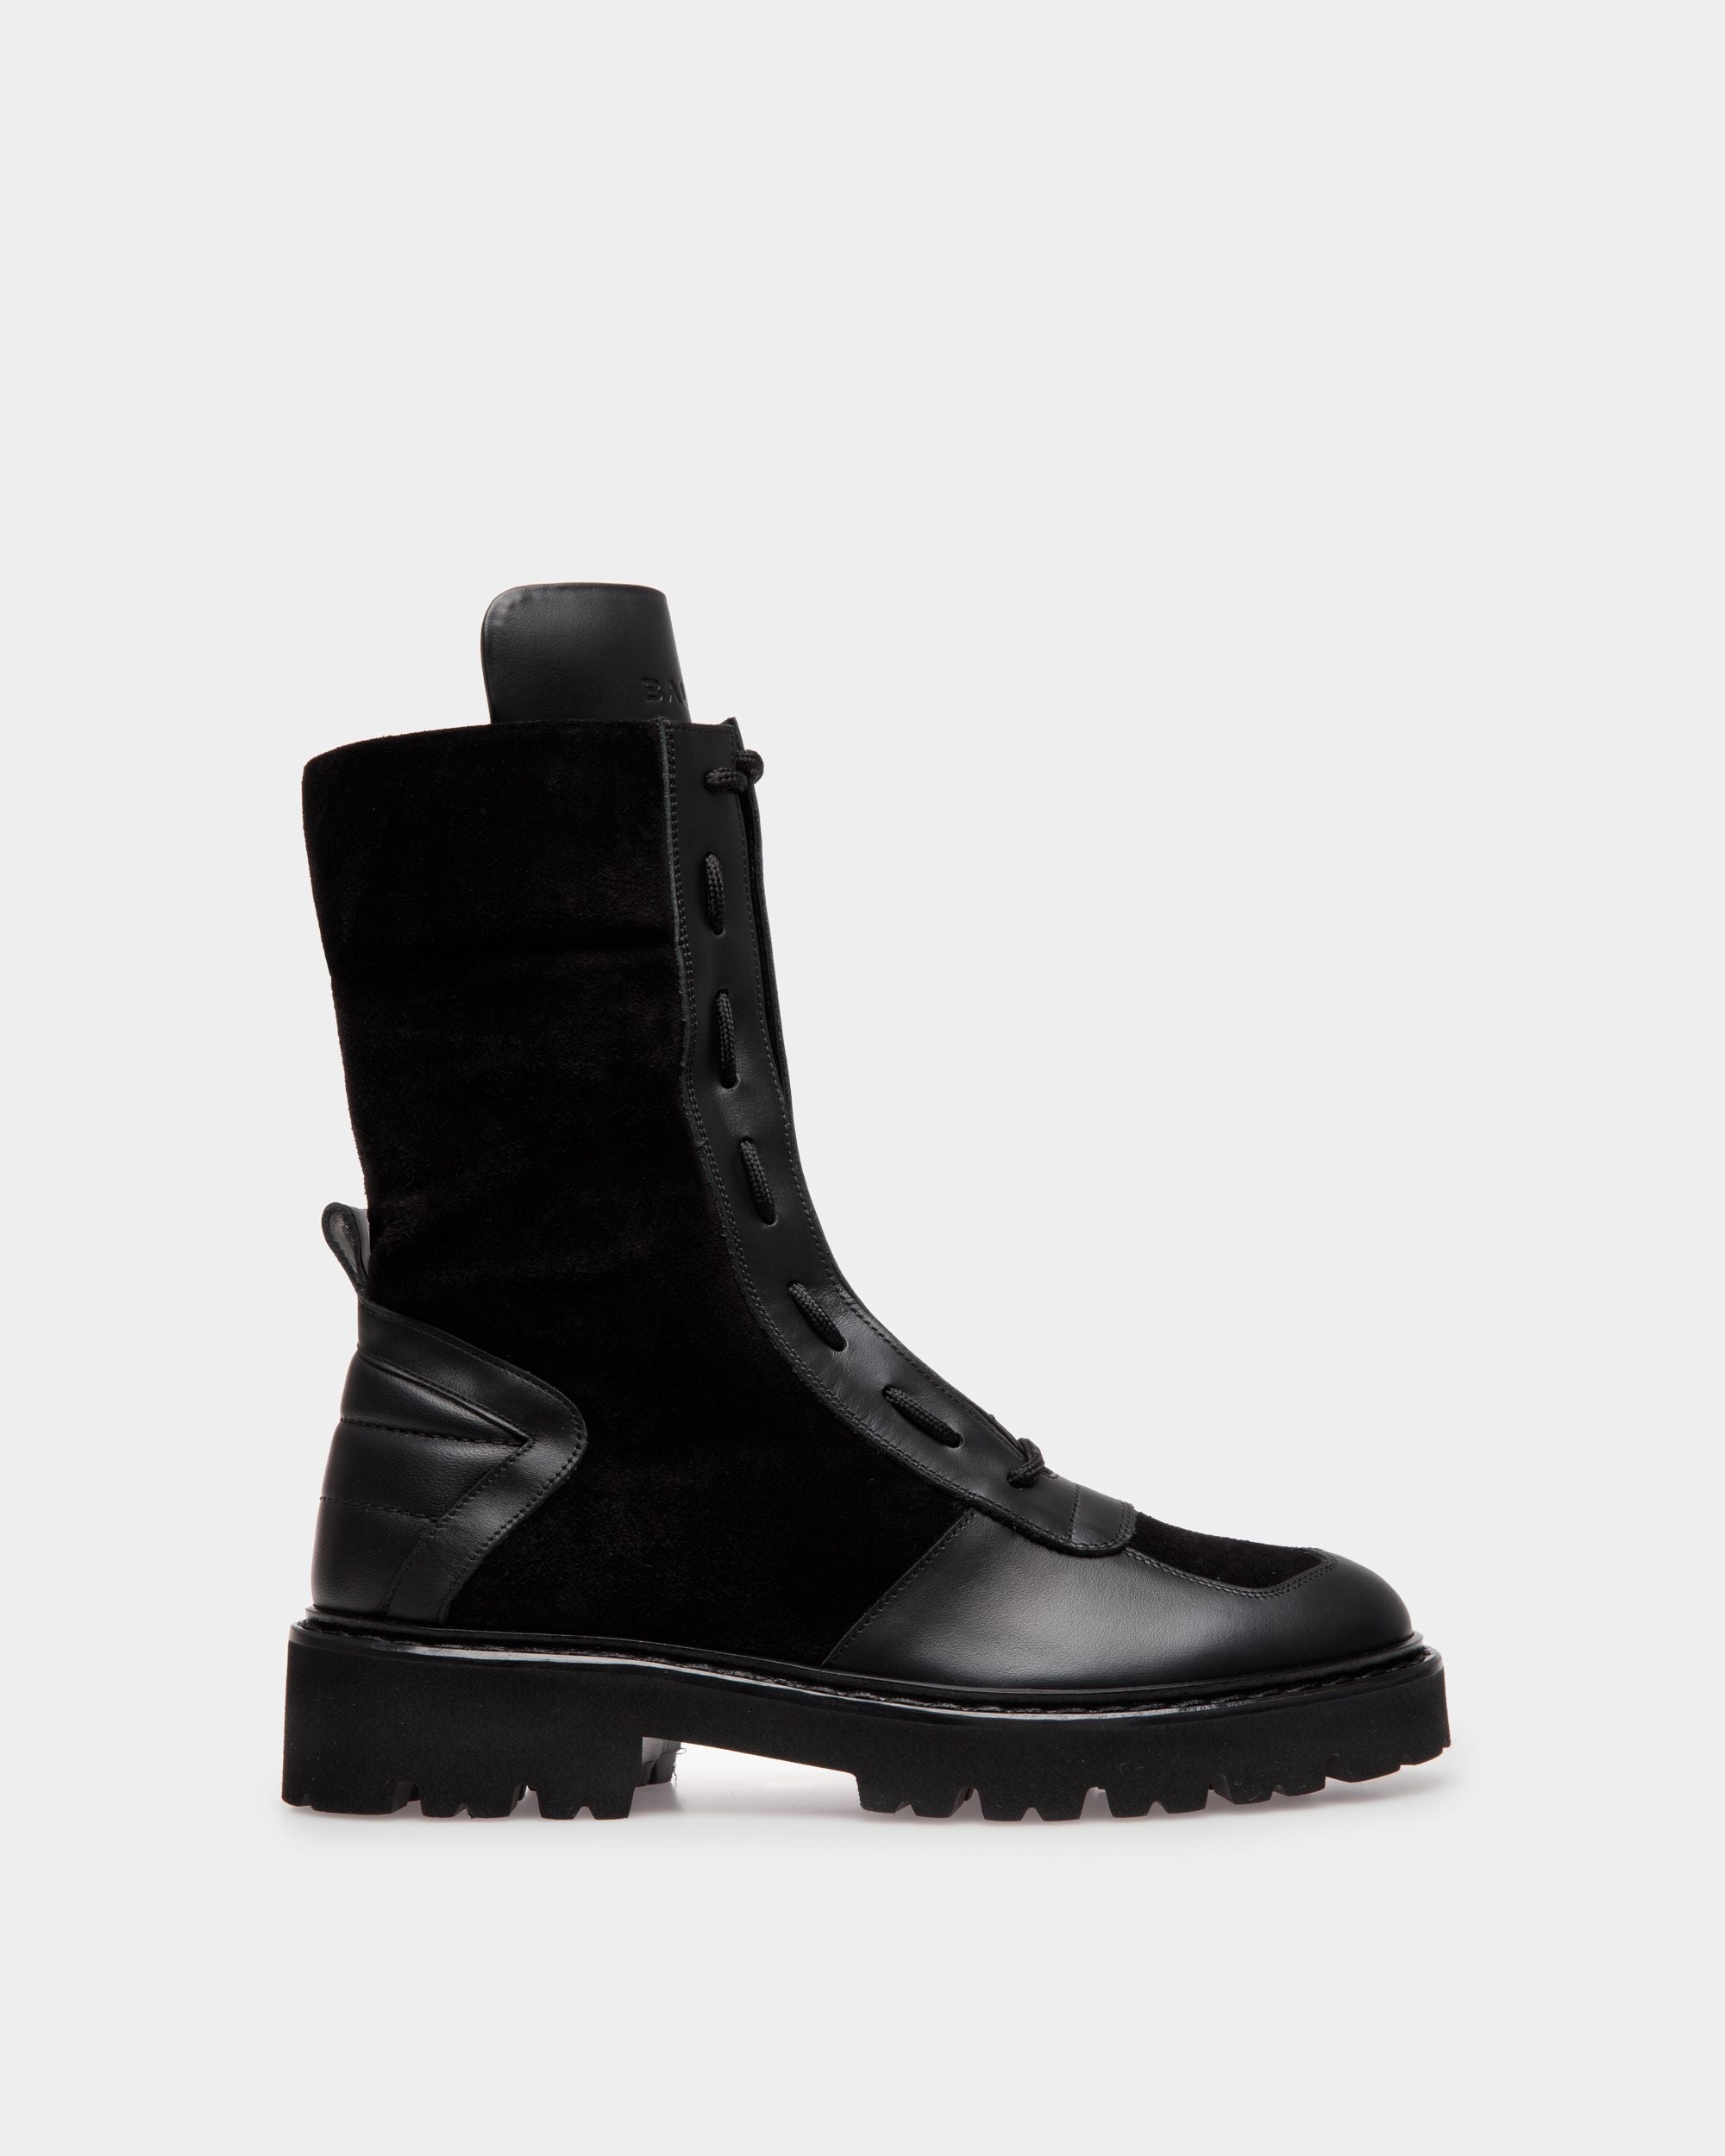 Narys | Women's Boots | Black Leather | Bally | Still Life Side